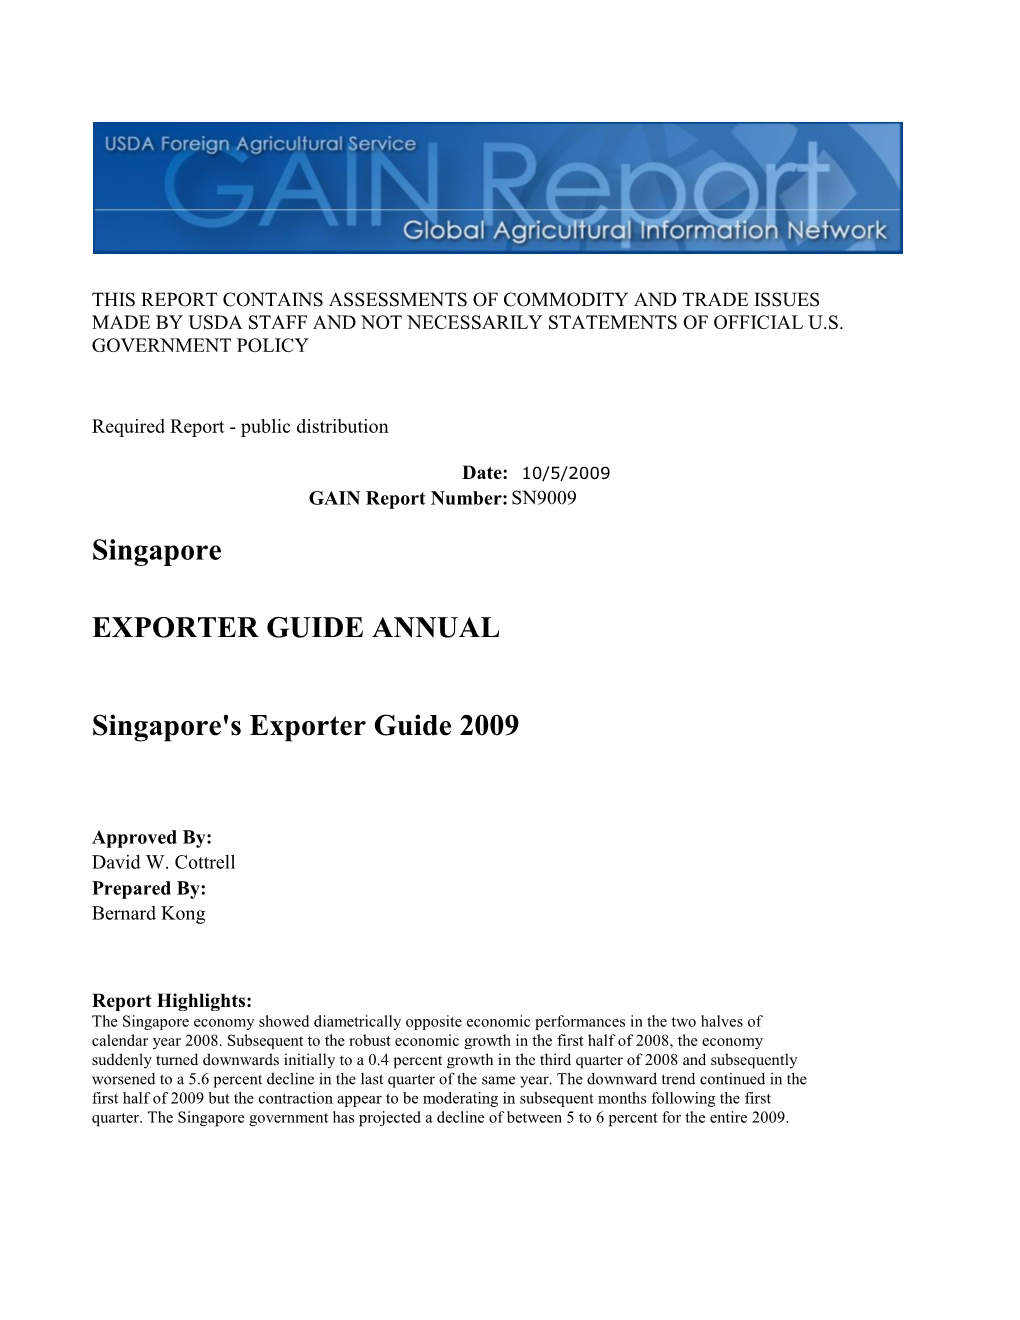 Singapore EXPORTER GUIDE ANNUAL Singapore's Exporter